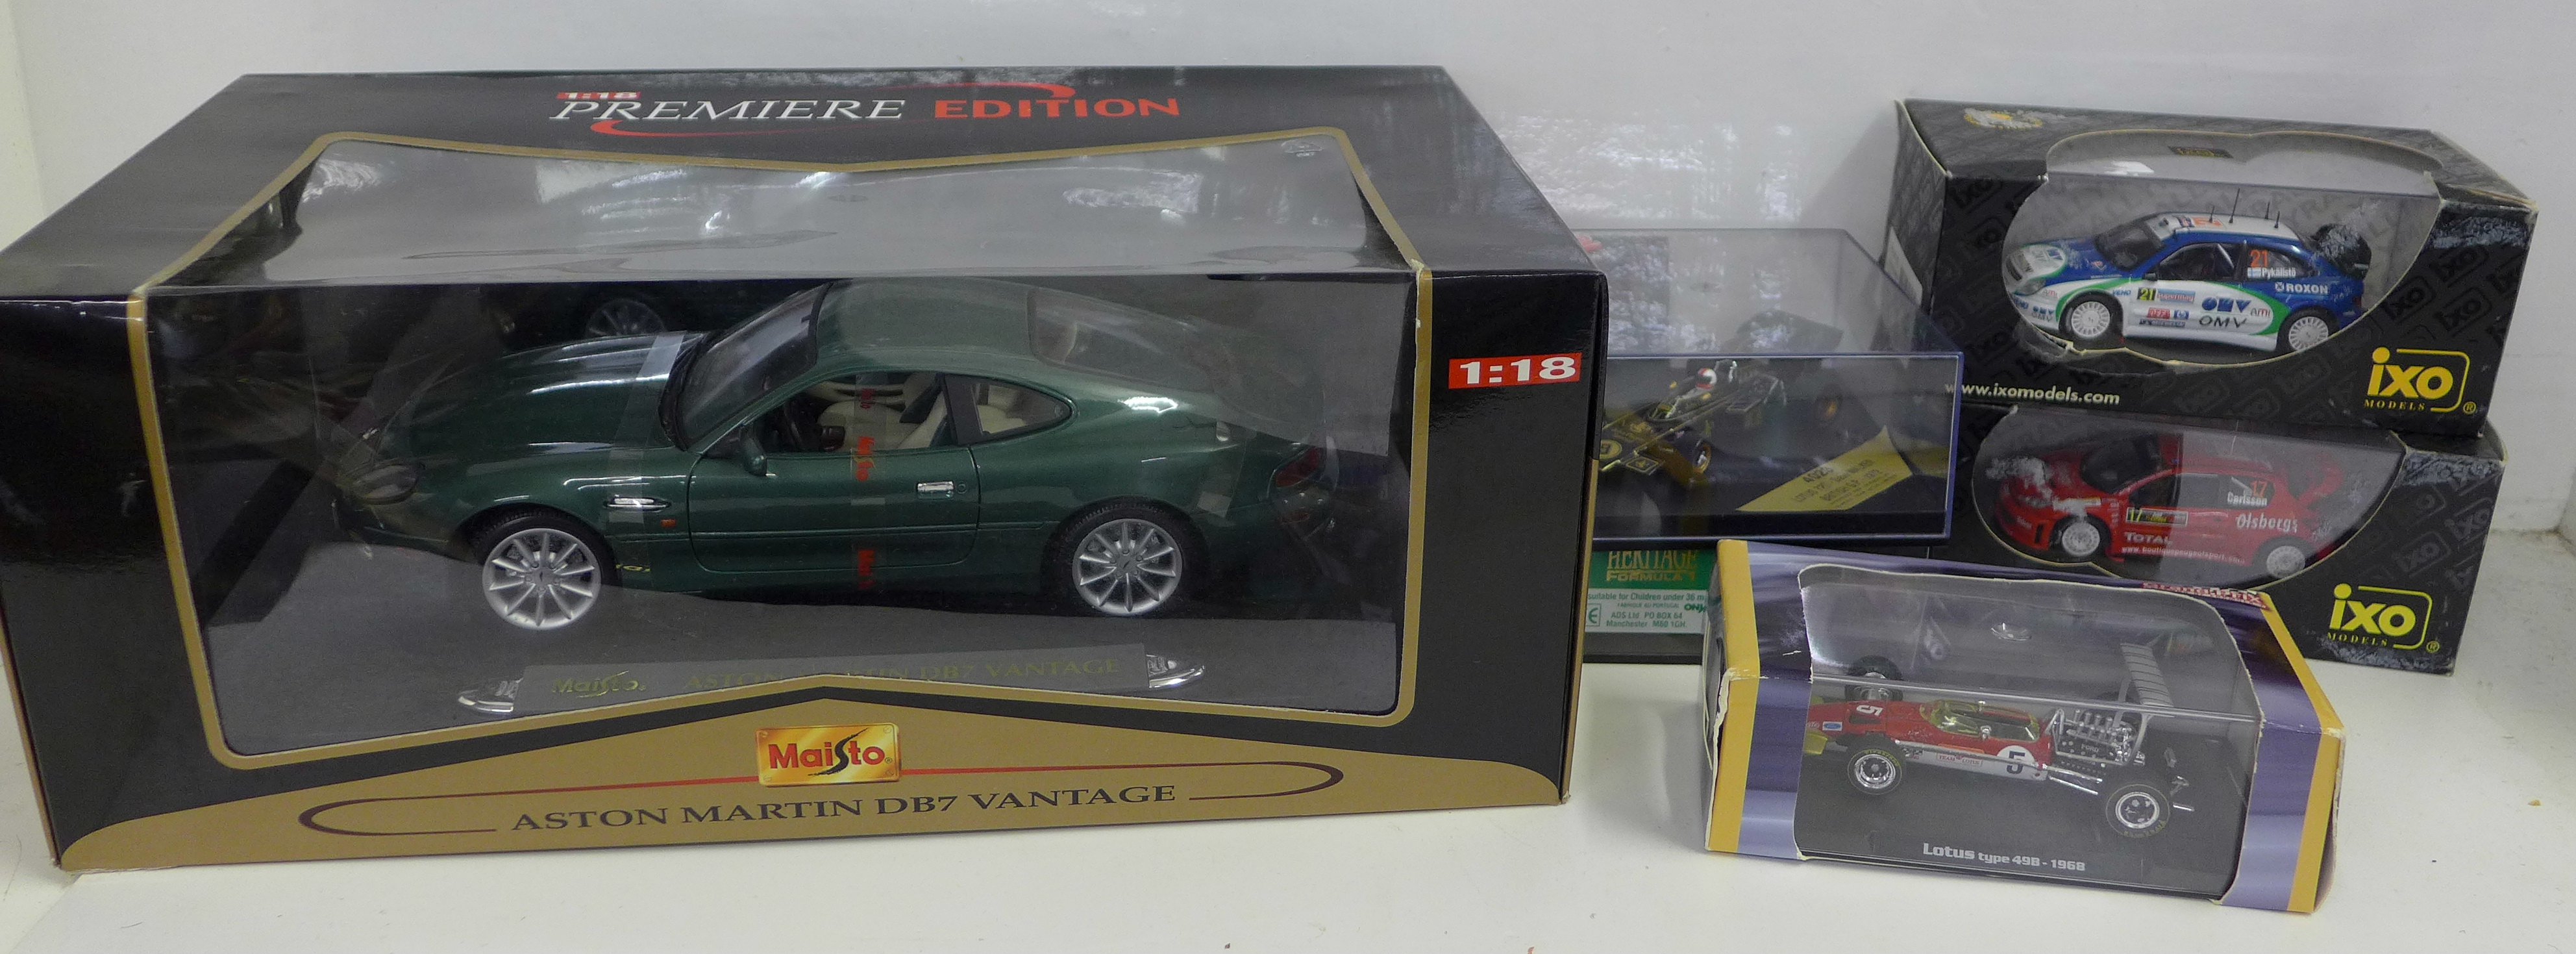 Six model vehicles in boxes, including Maisto, Aston Martin DB7 Vantage and Ixo